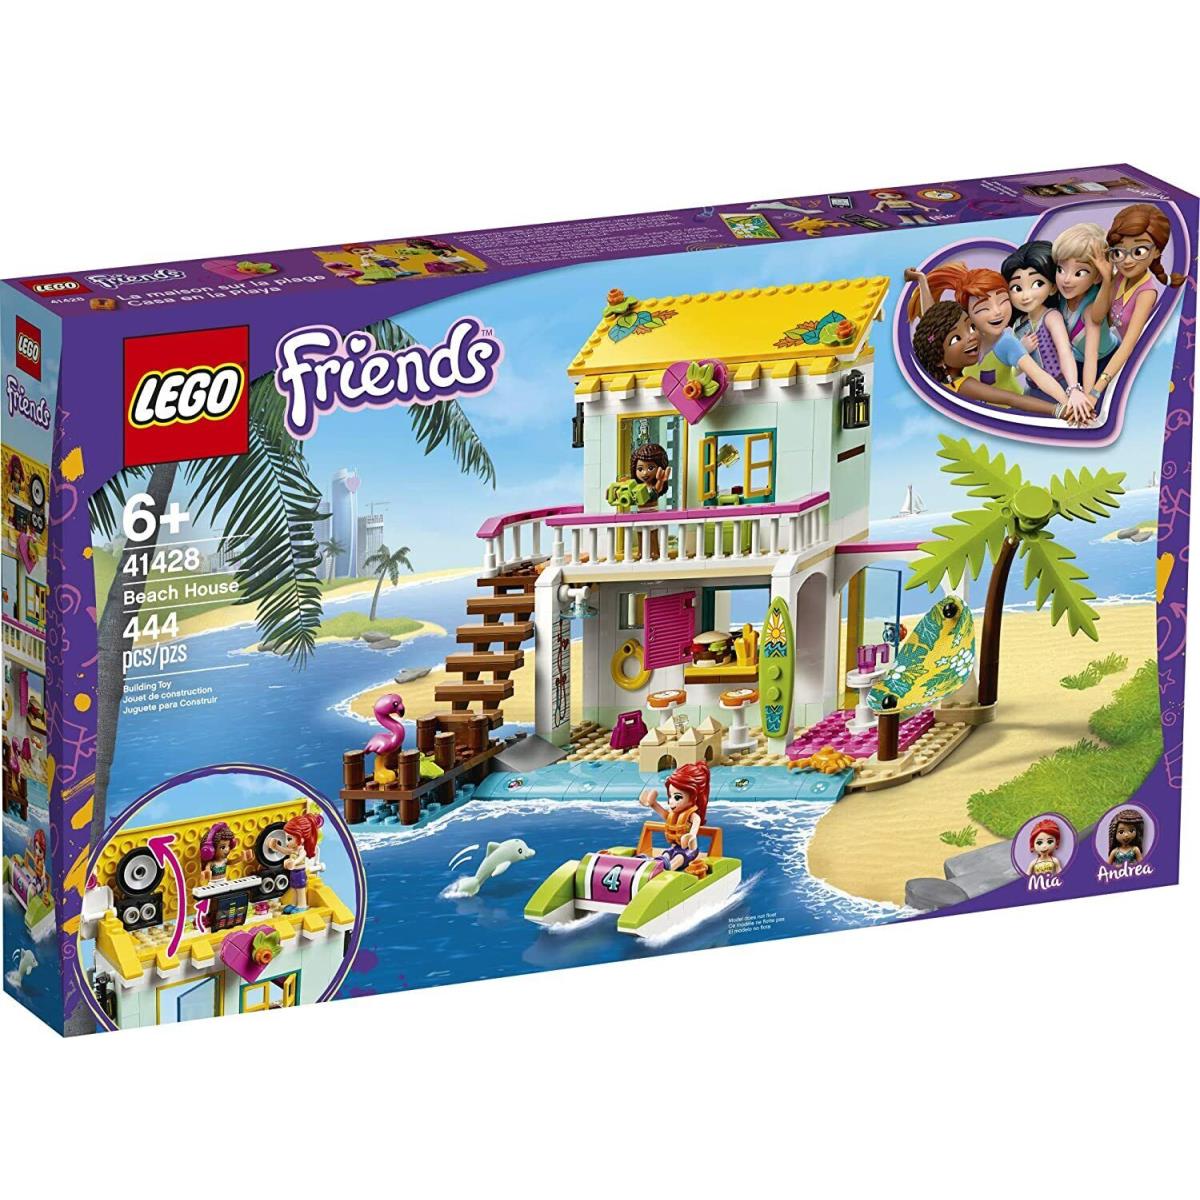 Lego Friends: Beach House 41428 Buidling Kit 444 Pcs Playset Retired Set